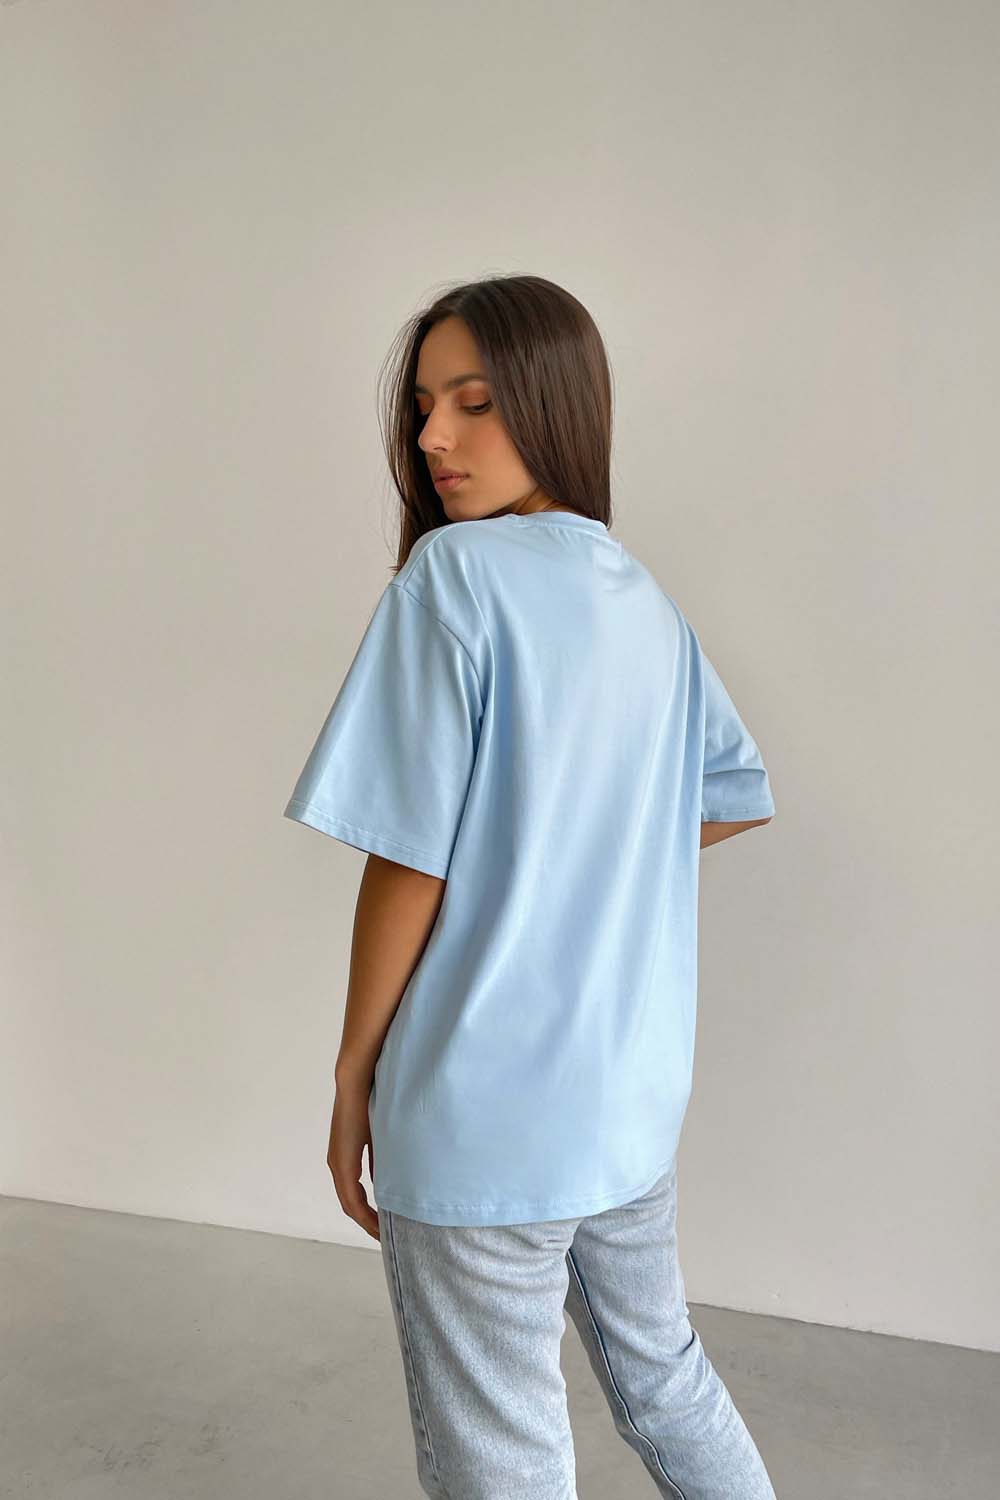 Essential T-Shirt Oversized in Powder Blue